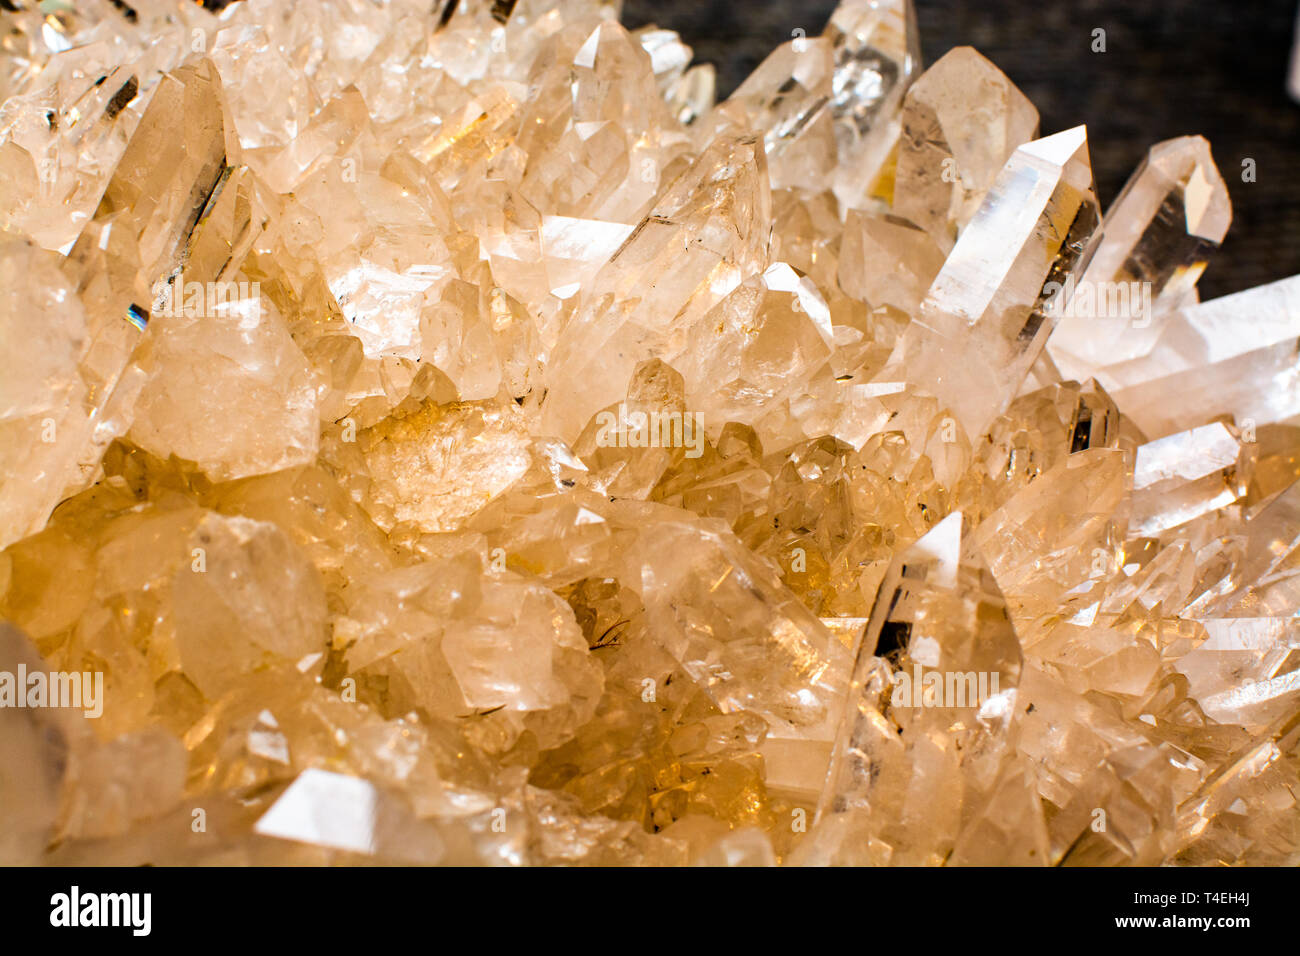 https://c8.alamy.com/comp/T4EH4J/huge-crystal-of-colorless-gemstone-quarts-geology-mineral-background-close-up-T4EH4J.jpg